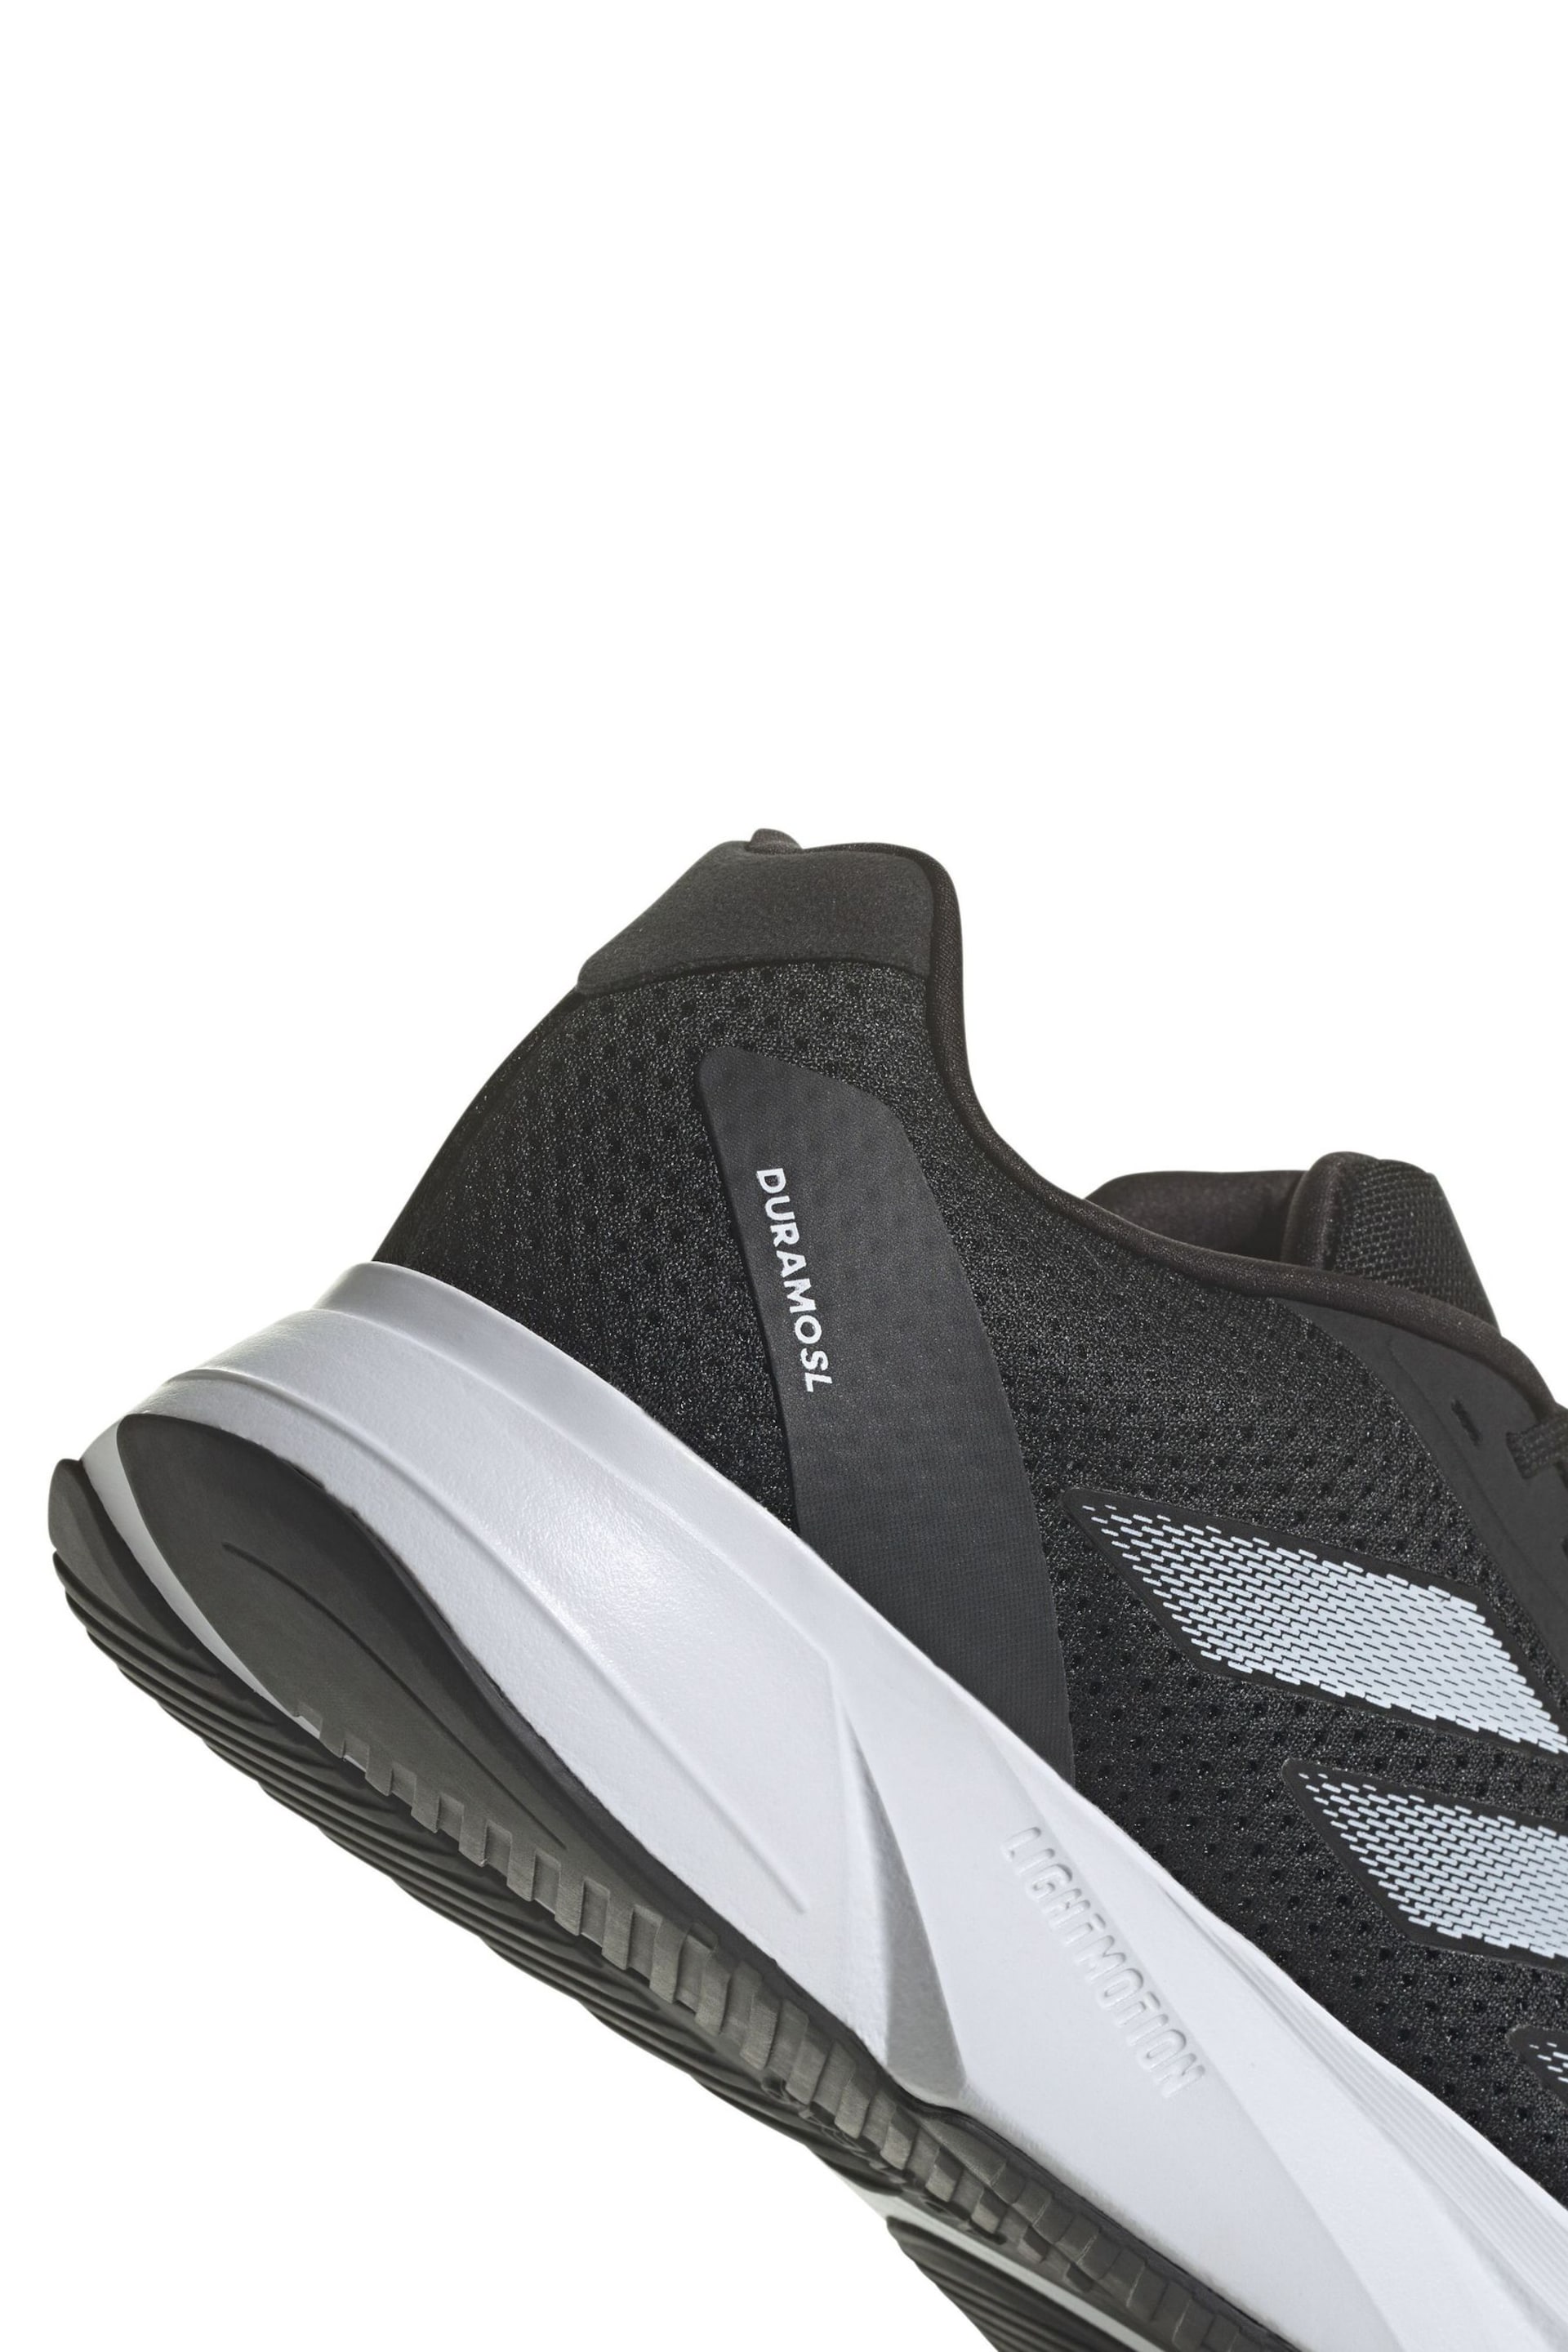 adidas Black/White Duramo SL Trainers - Image 9 of 9